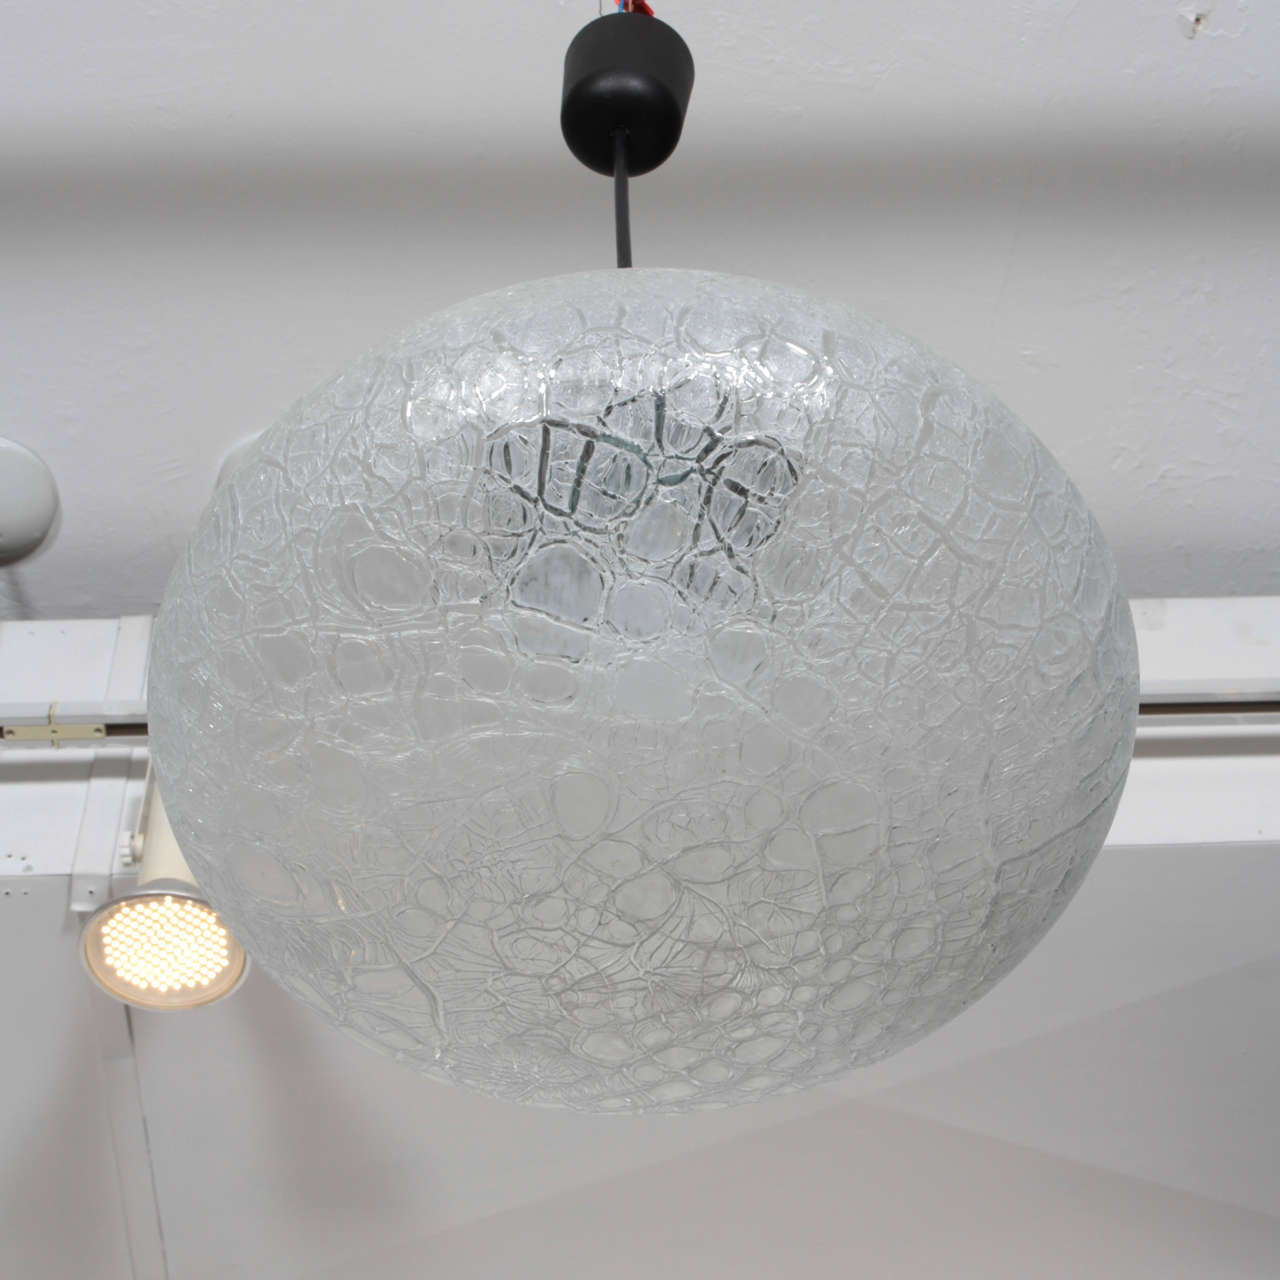 Textured Glass Pendant Fixture, Germany 1